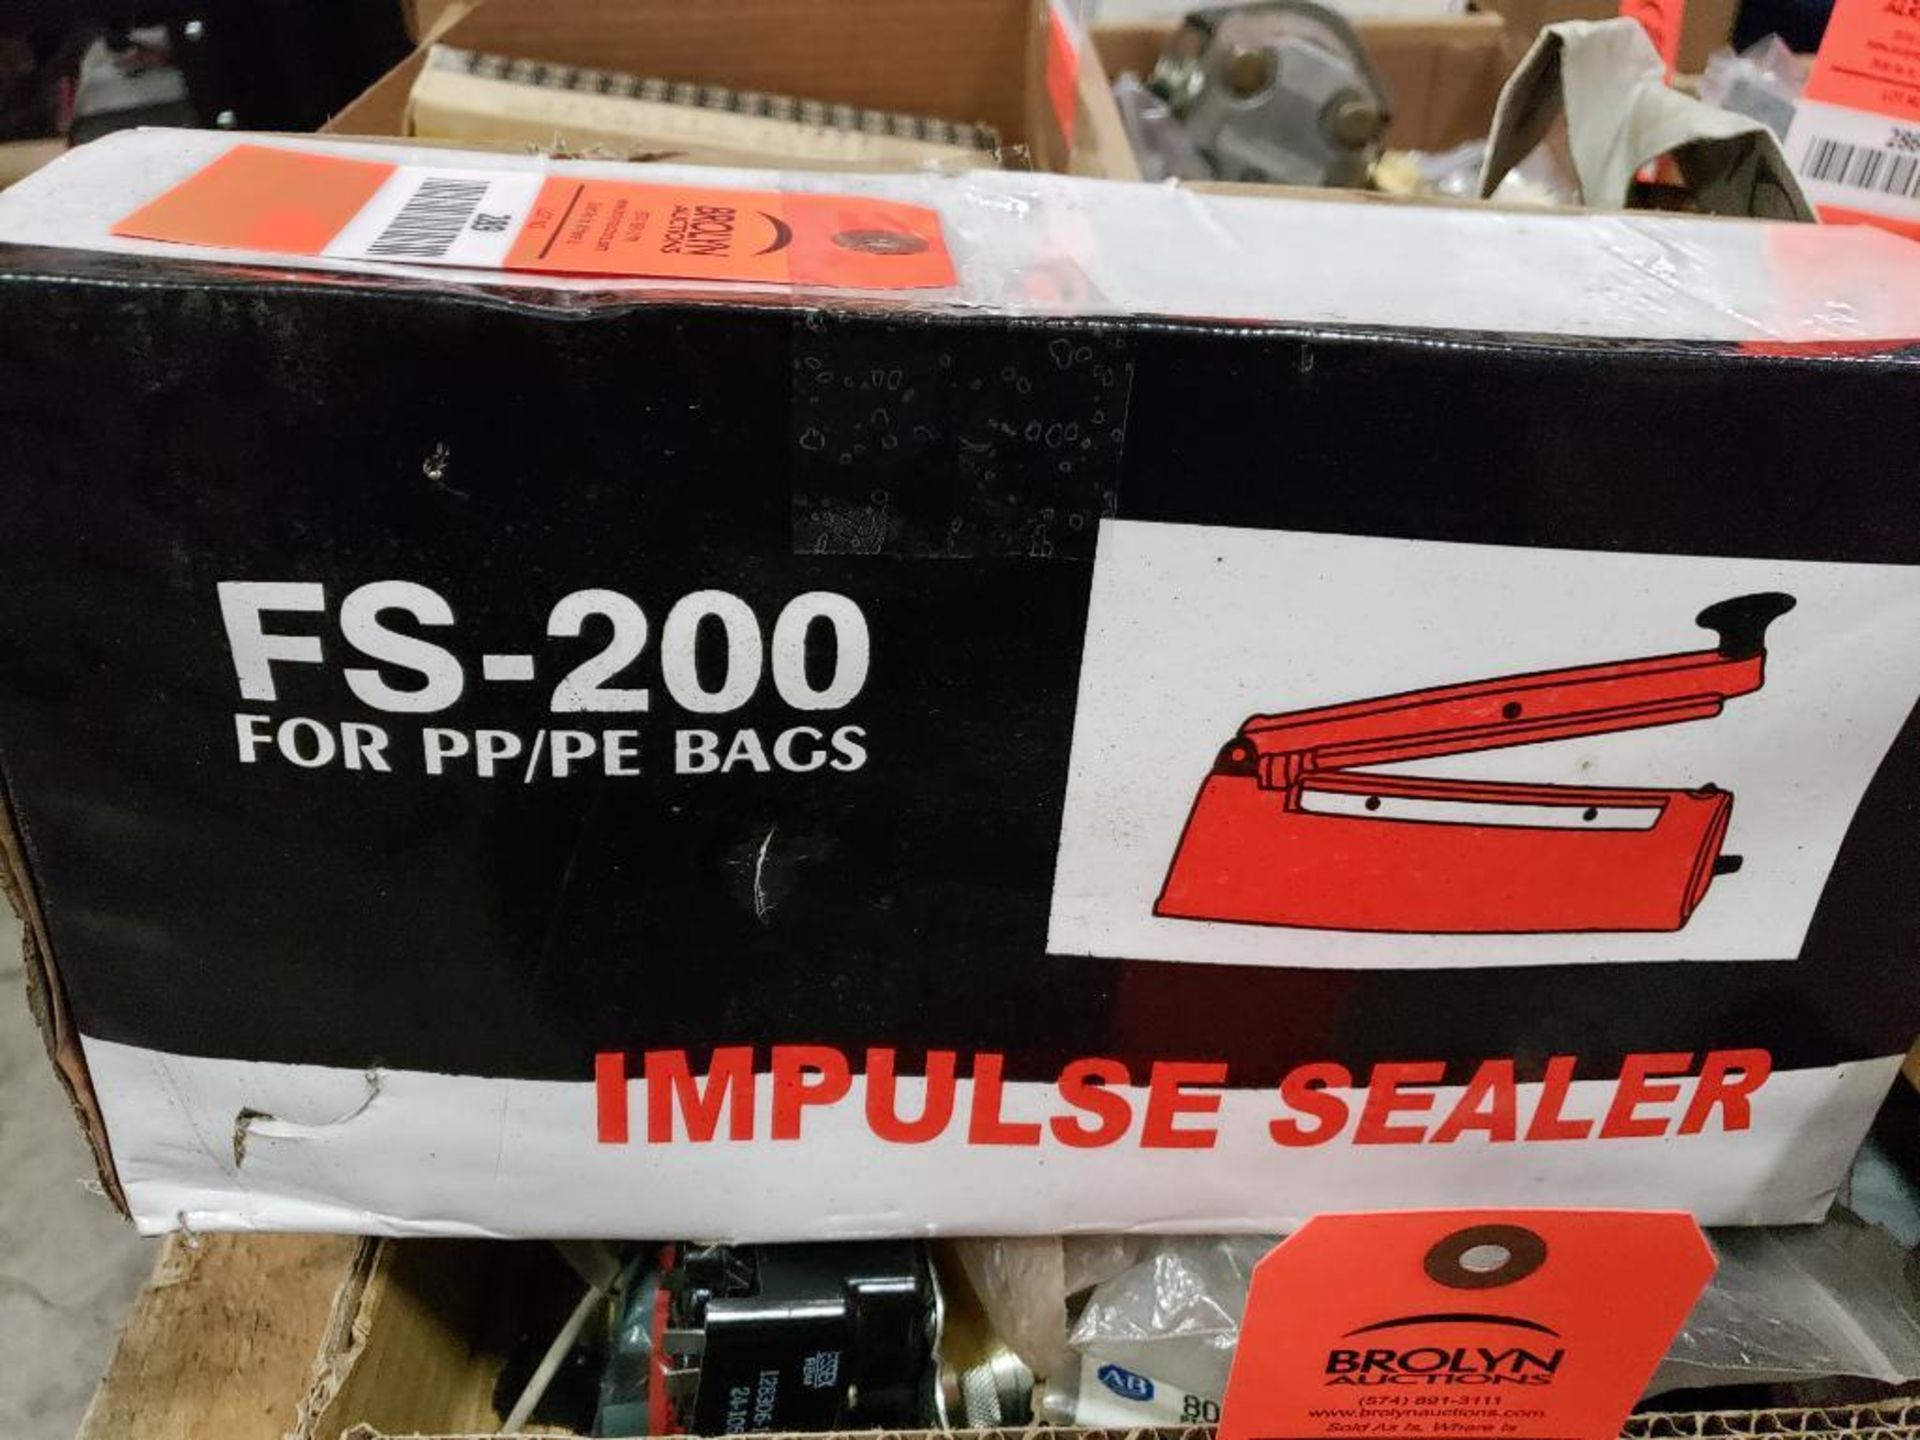 Impulses sealer FS-200 for PP/PE bags. New in box.